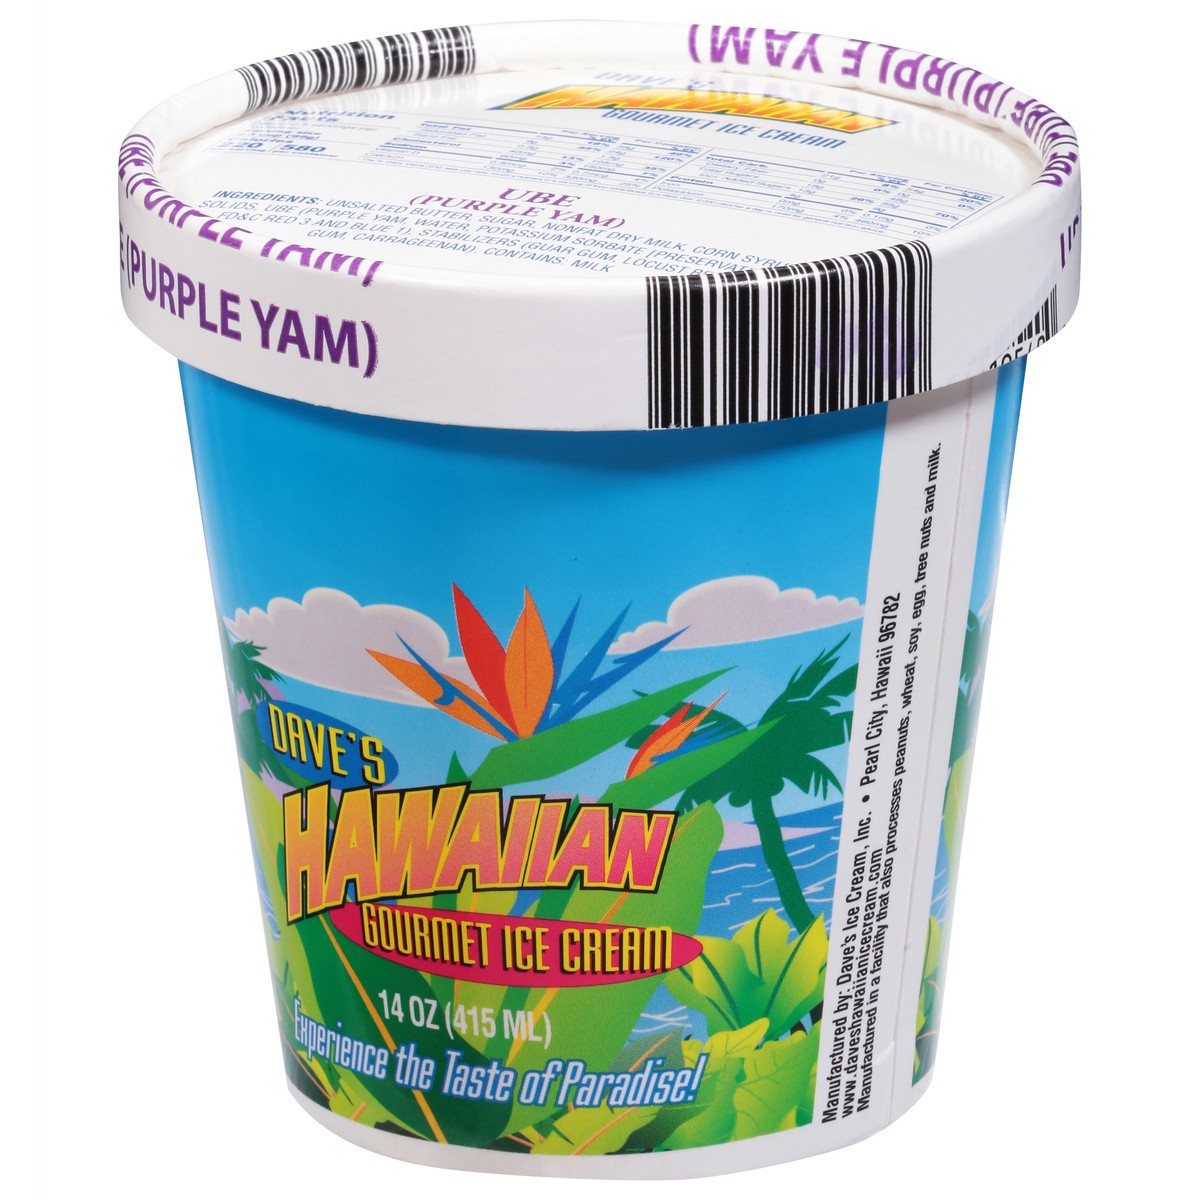 slide 9 of 13, Dave's Hawaiian Gourmet Ice Cream Ube (Purple Yam) Ice Cream 14 oz, 14 oz